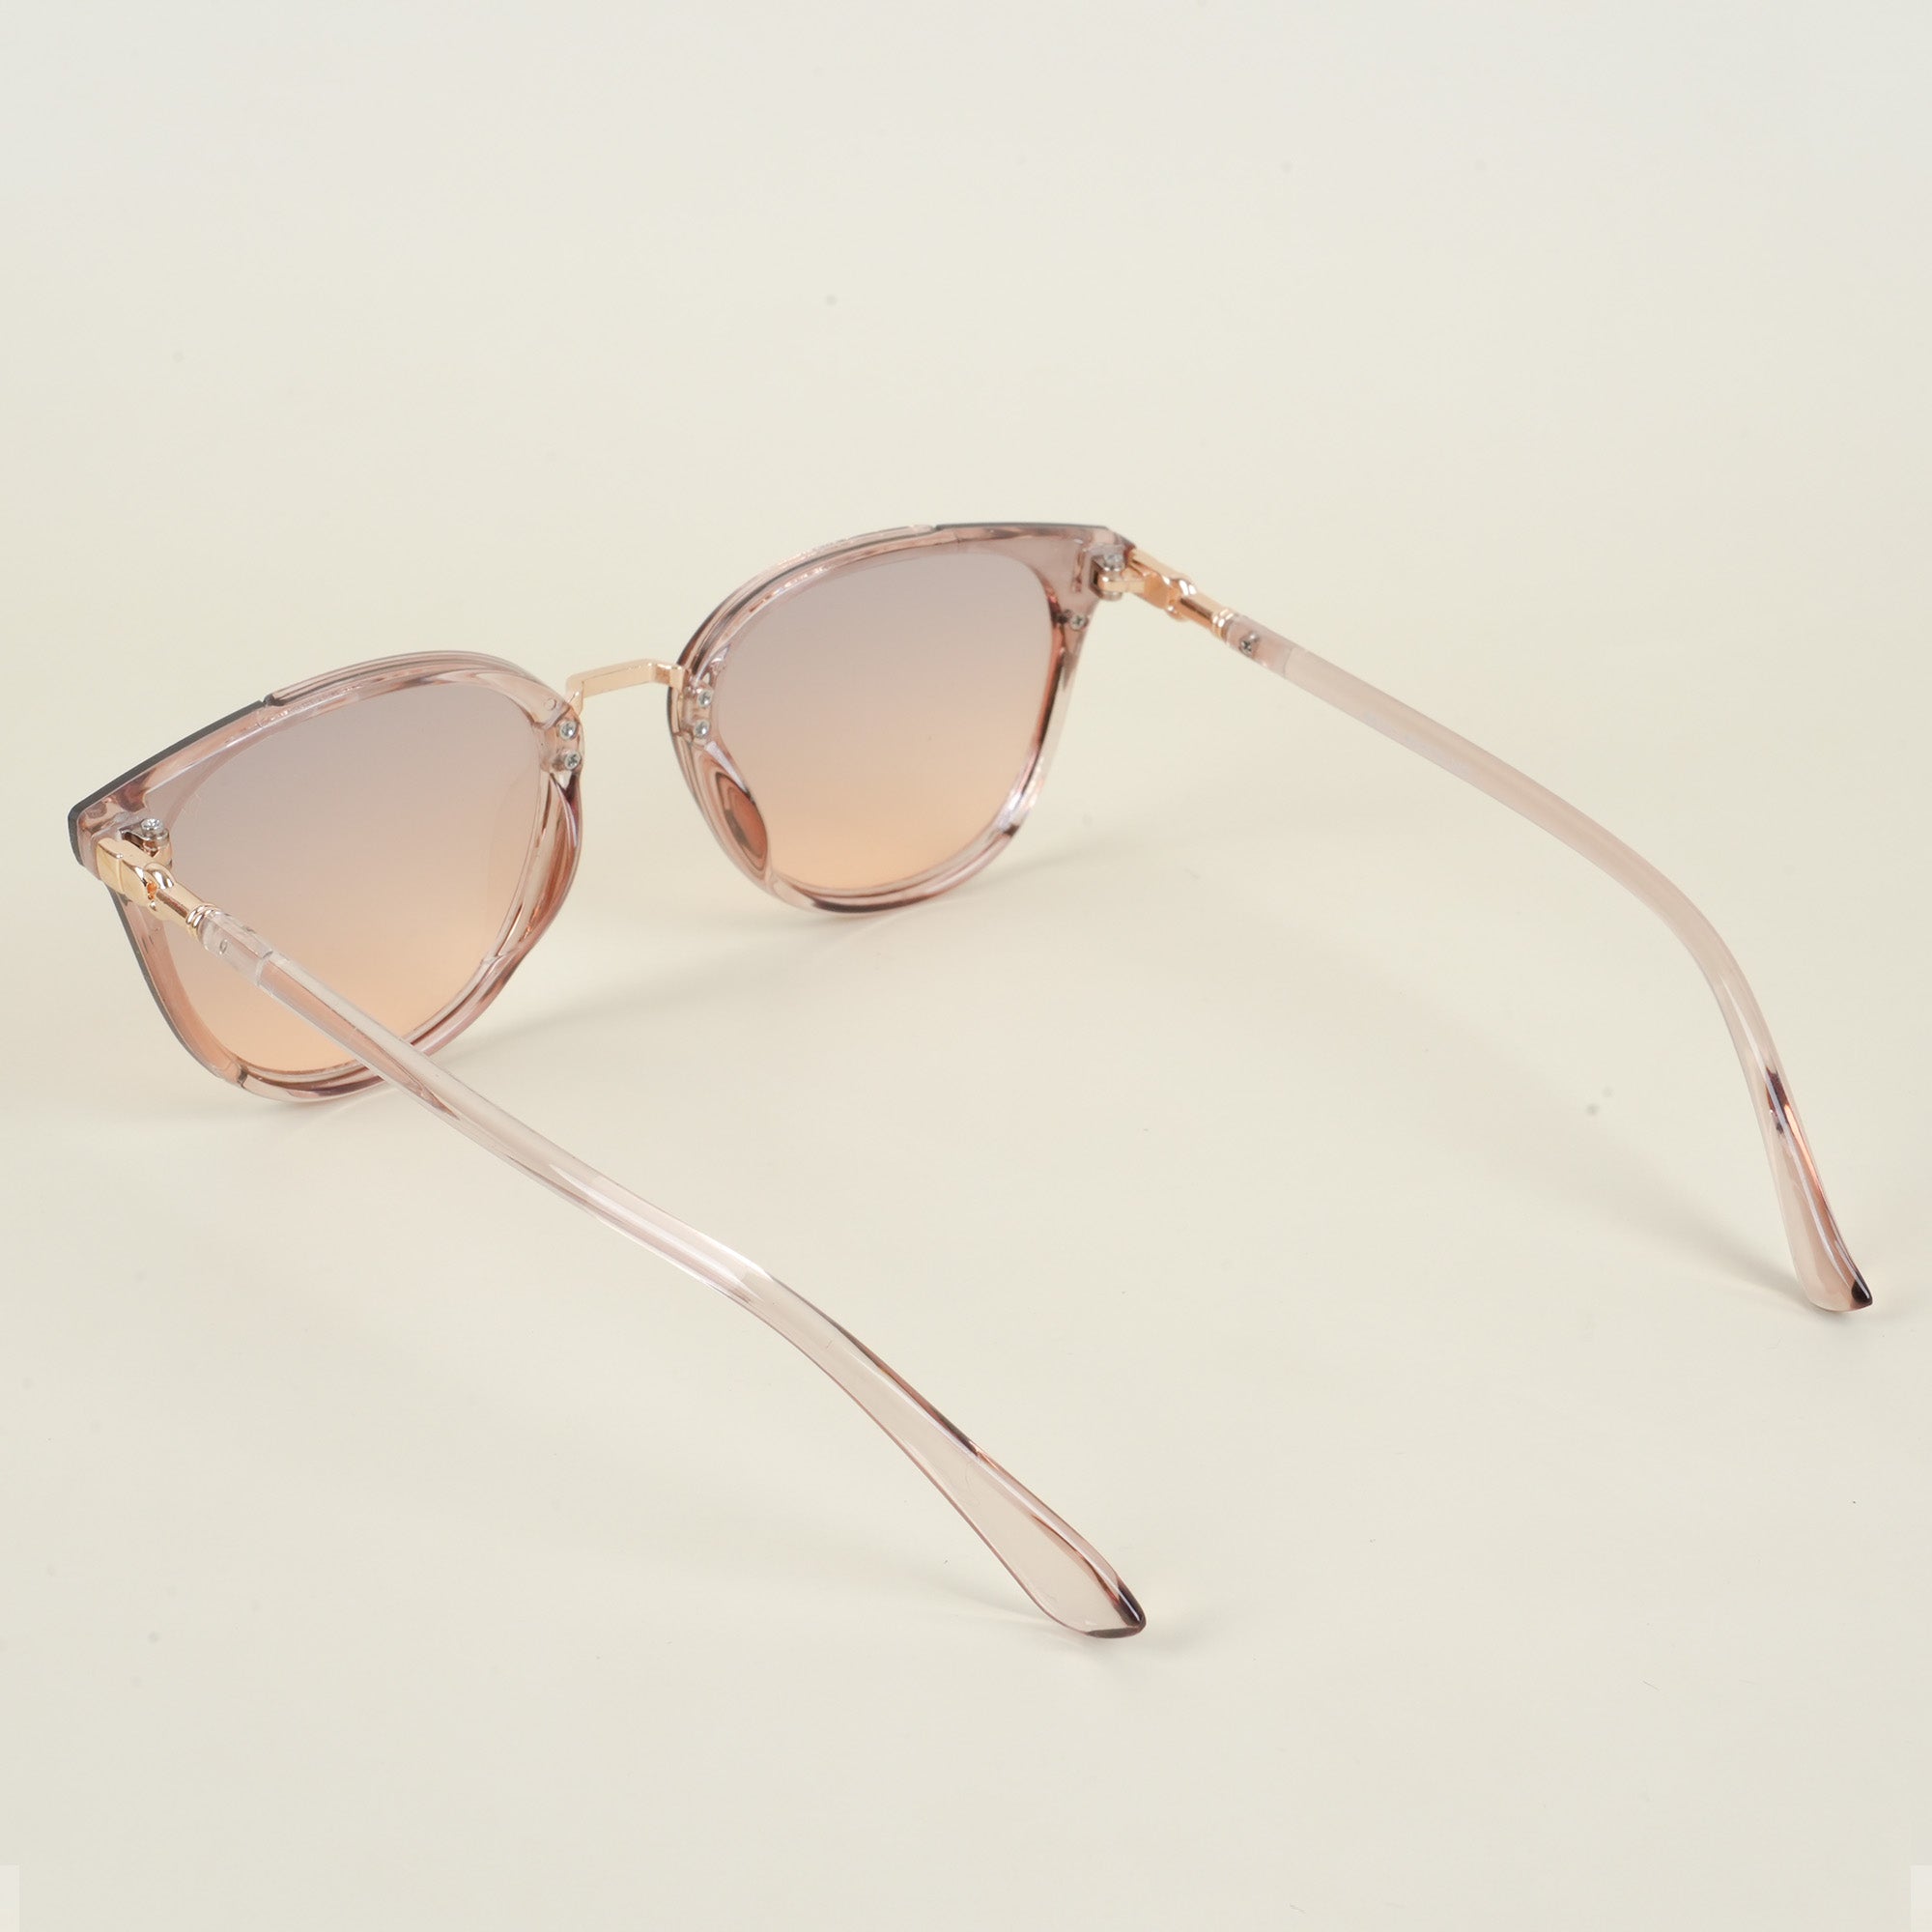 Voyage Cateye Sunglasses for Women (Pink & Grey Lens | Light Pink & Golden Frame - MG3174)